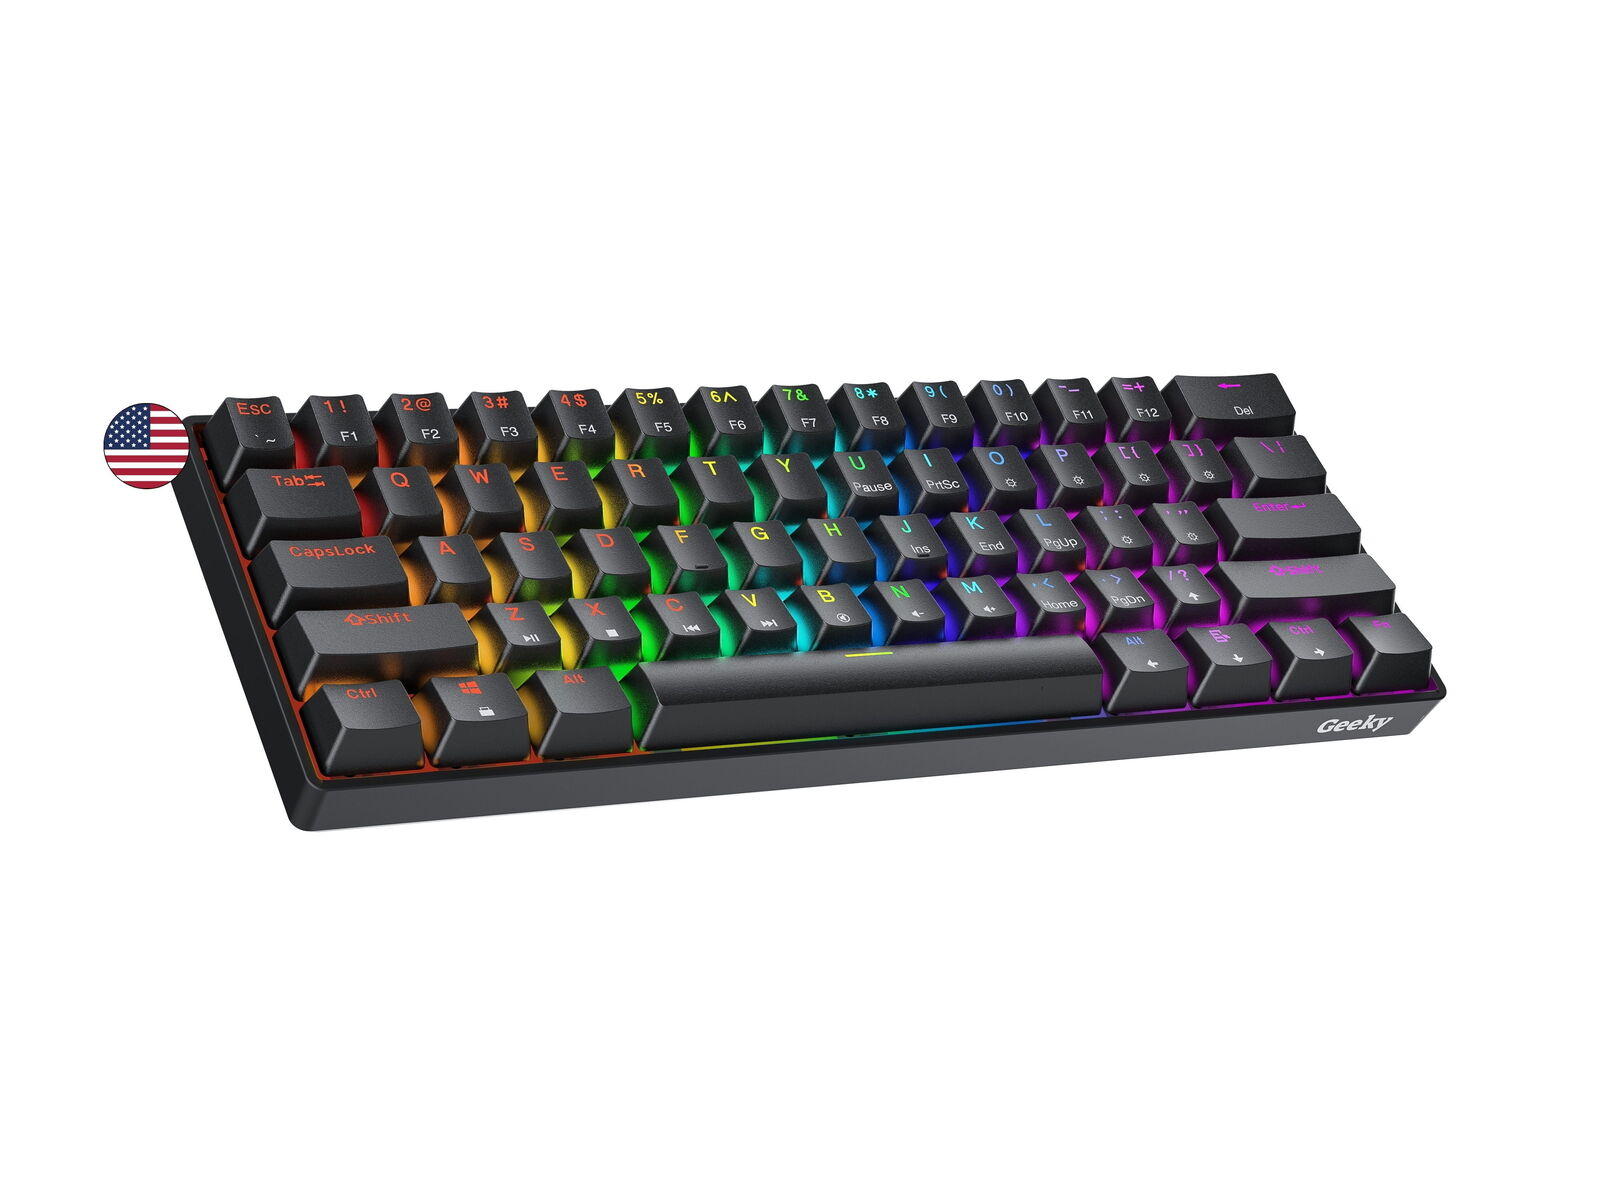 Geeky GK61 SE 60% Mechanical Gaming Keyboard 61 Key Multi Color RGB LED Backlit